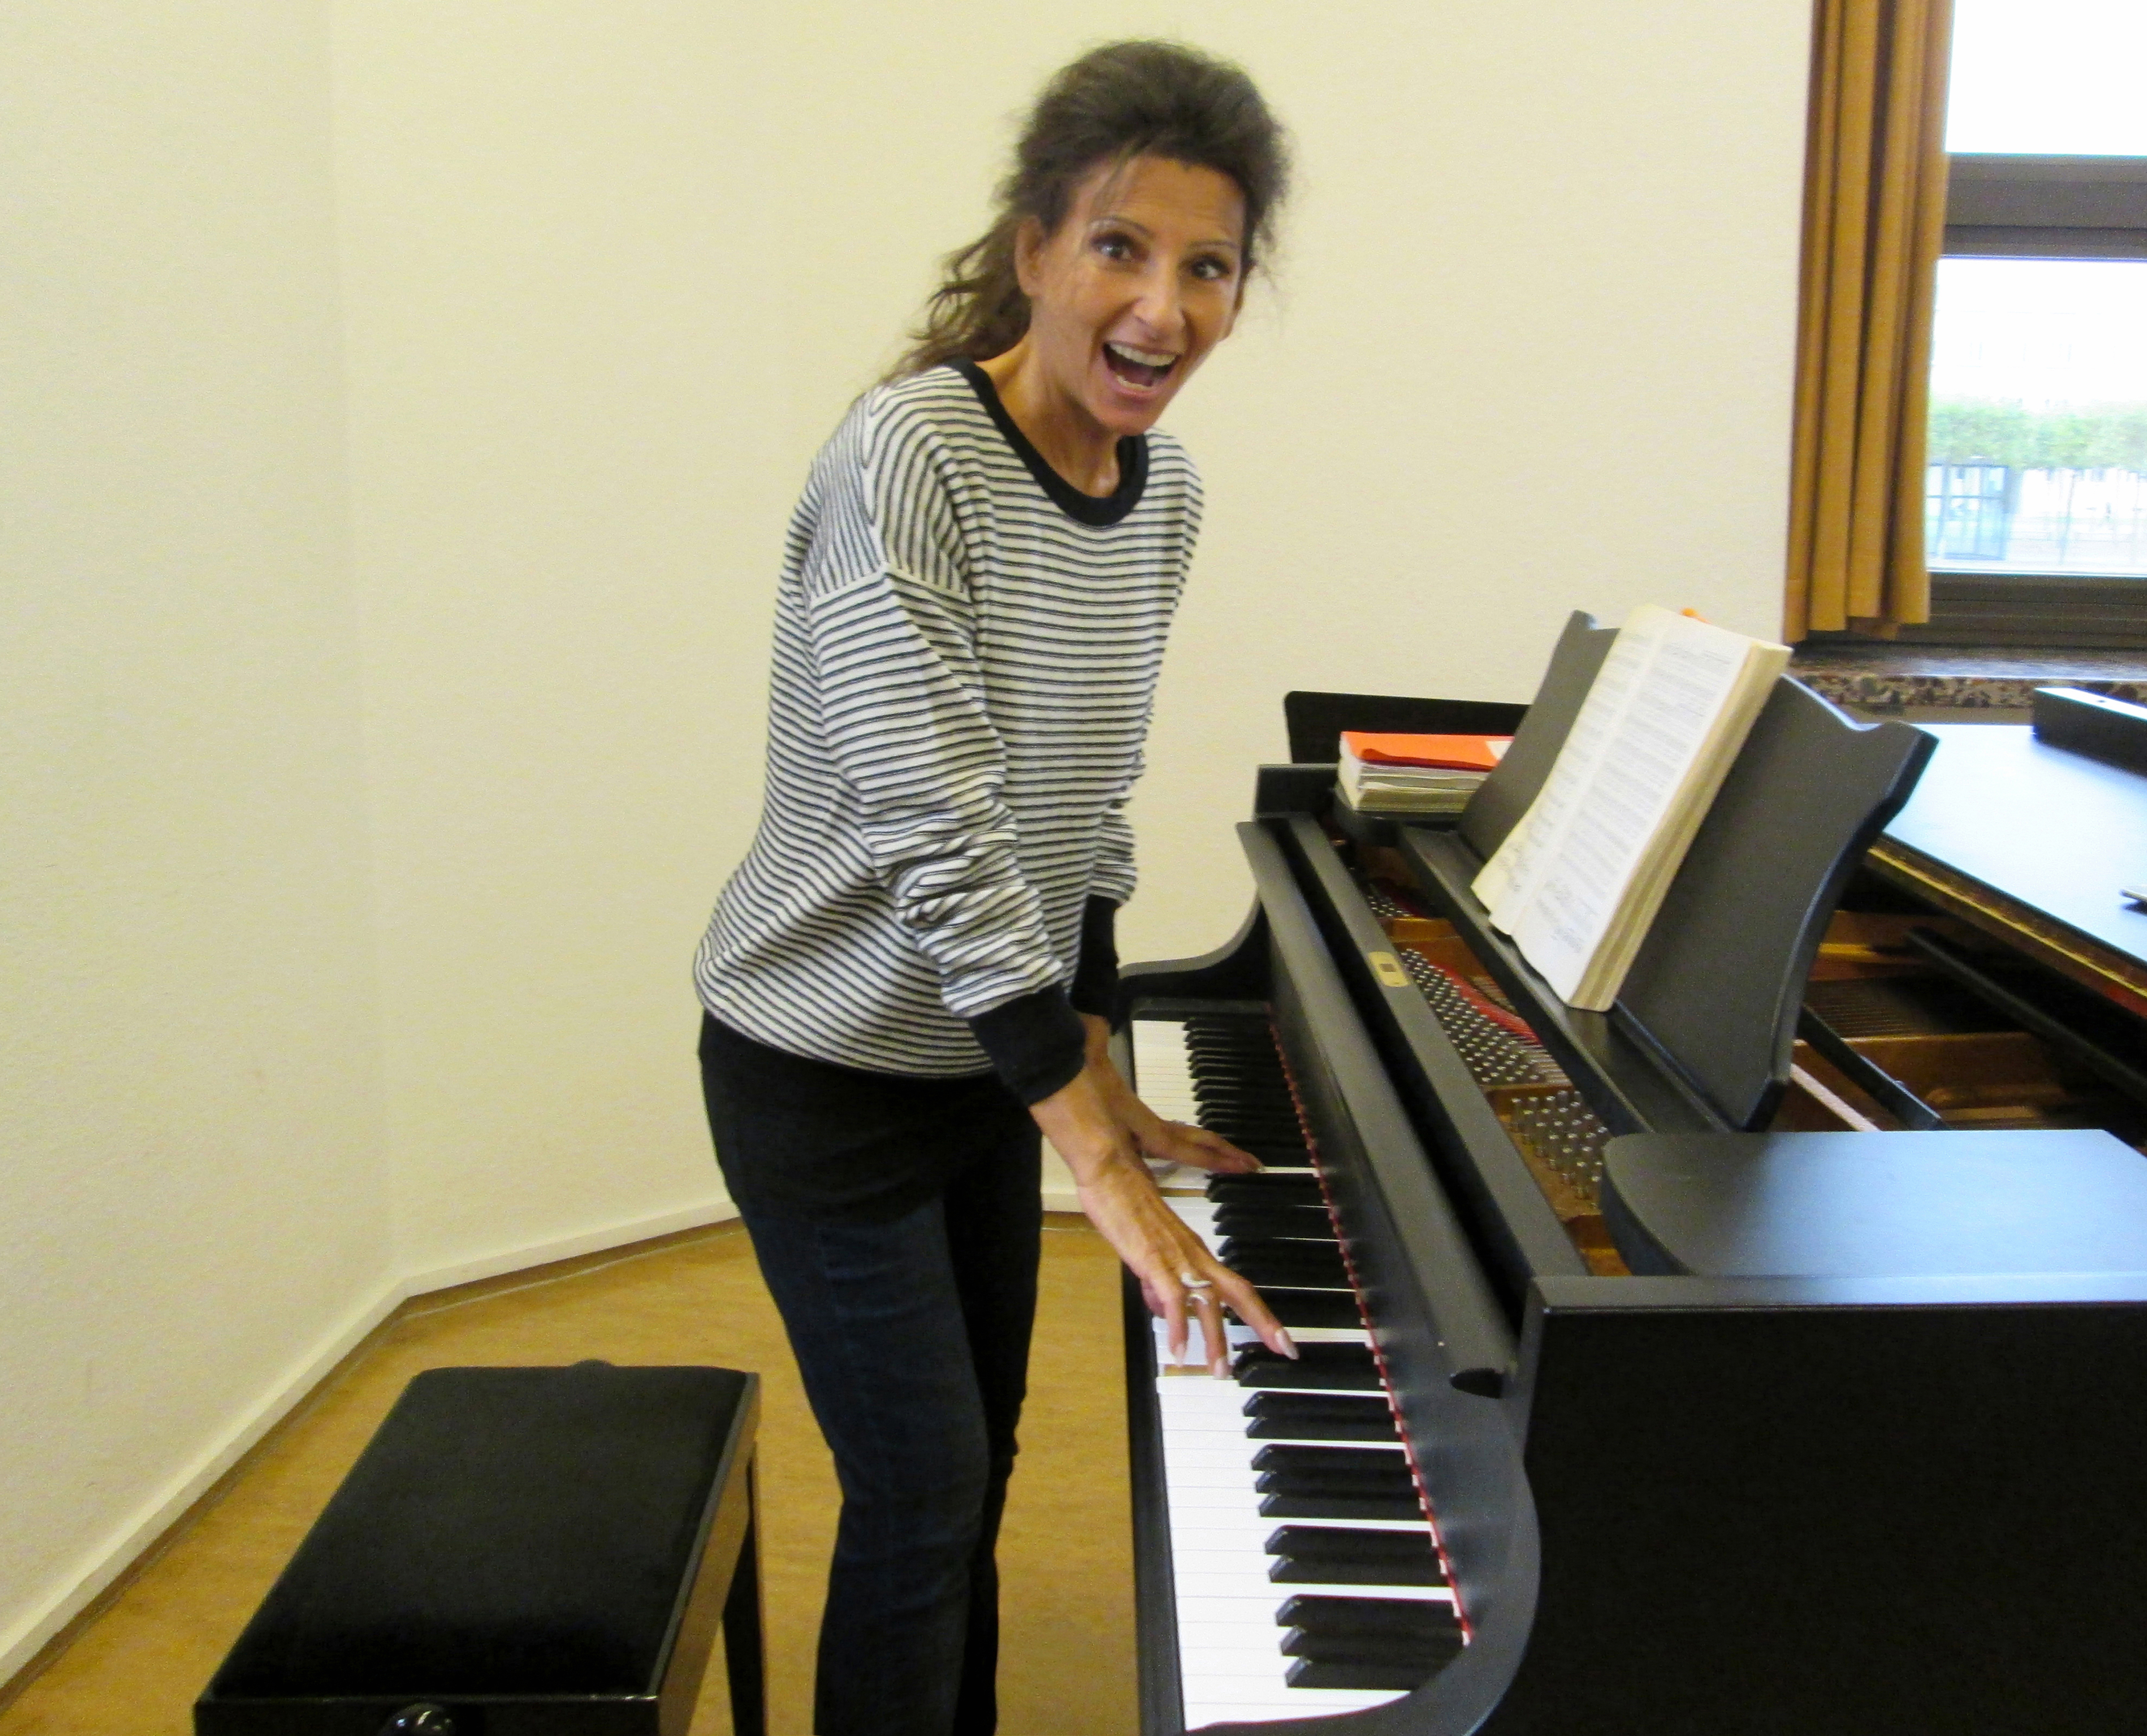 Lucia Aliberti⚘Semperoper⚘Dresden⚘Gala Concert⚘Exercises⚘Piano⚘Steinway⚘Dressing Room⚘:http://www.luciaaliberti.it #luciaaliberti #semperoper #dresden #concert #steinway #dressingroom #piano #exercises